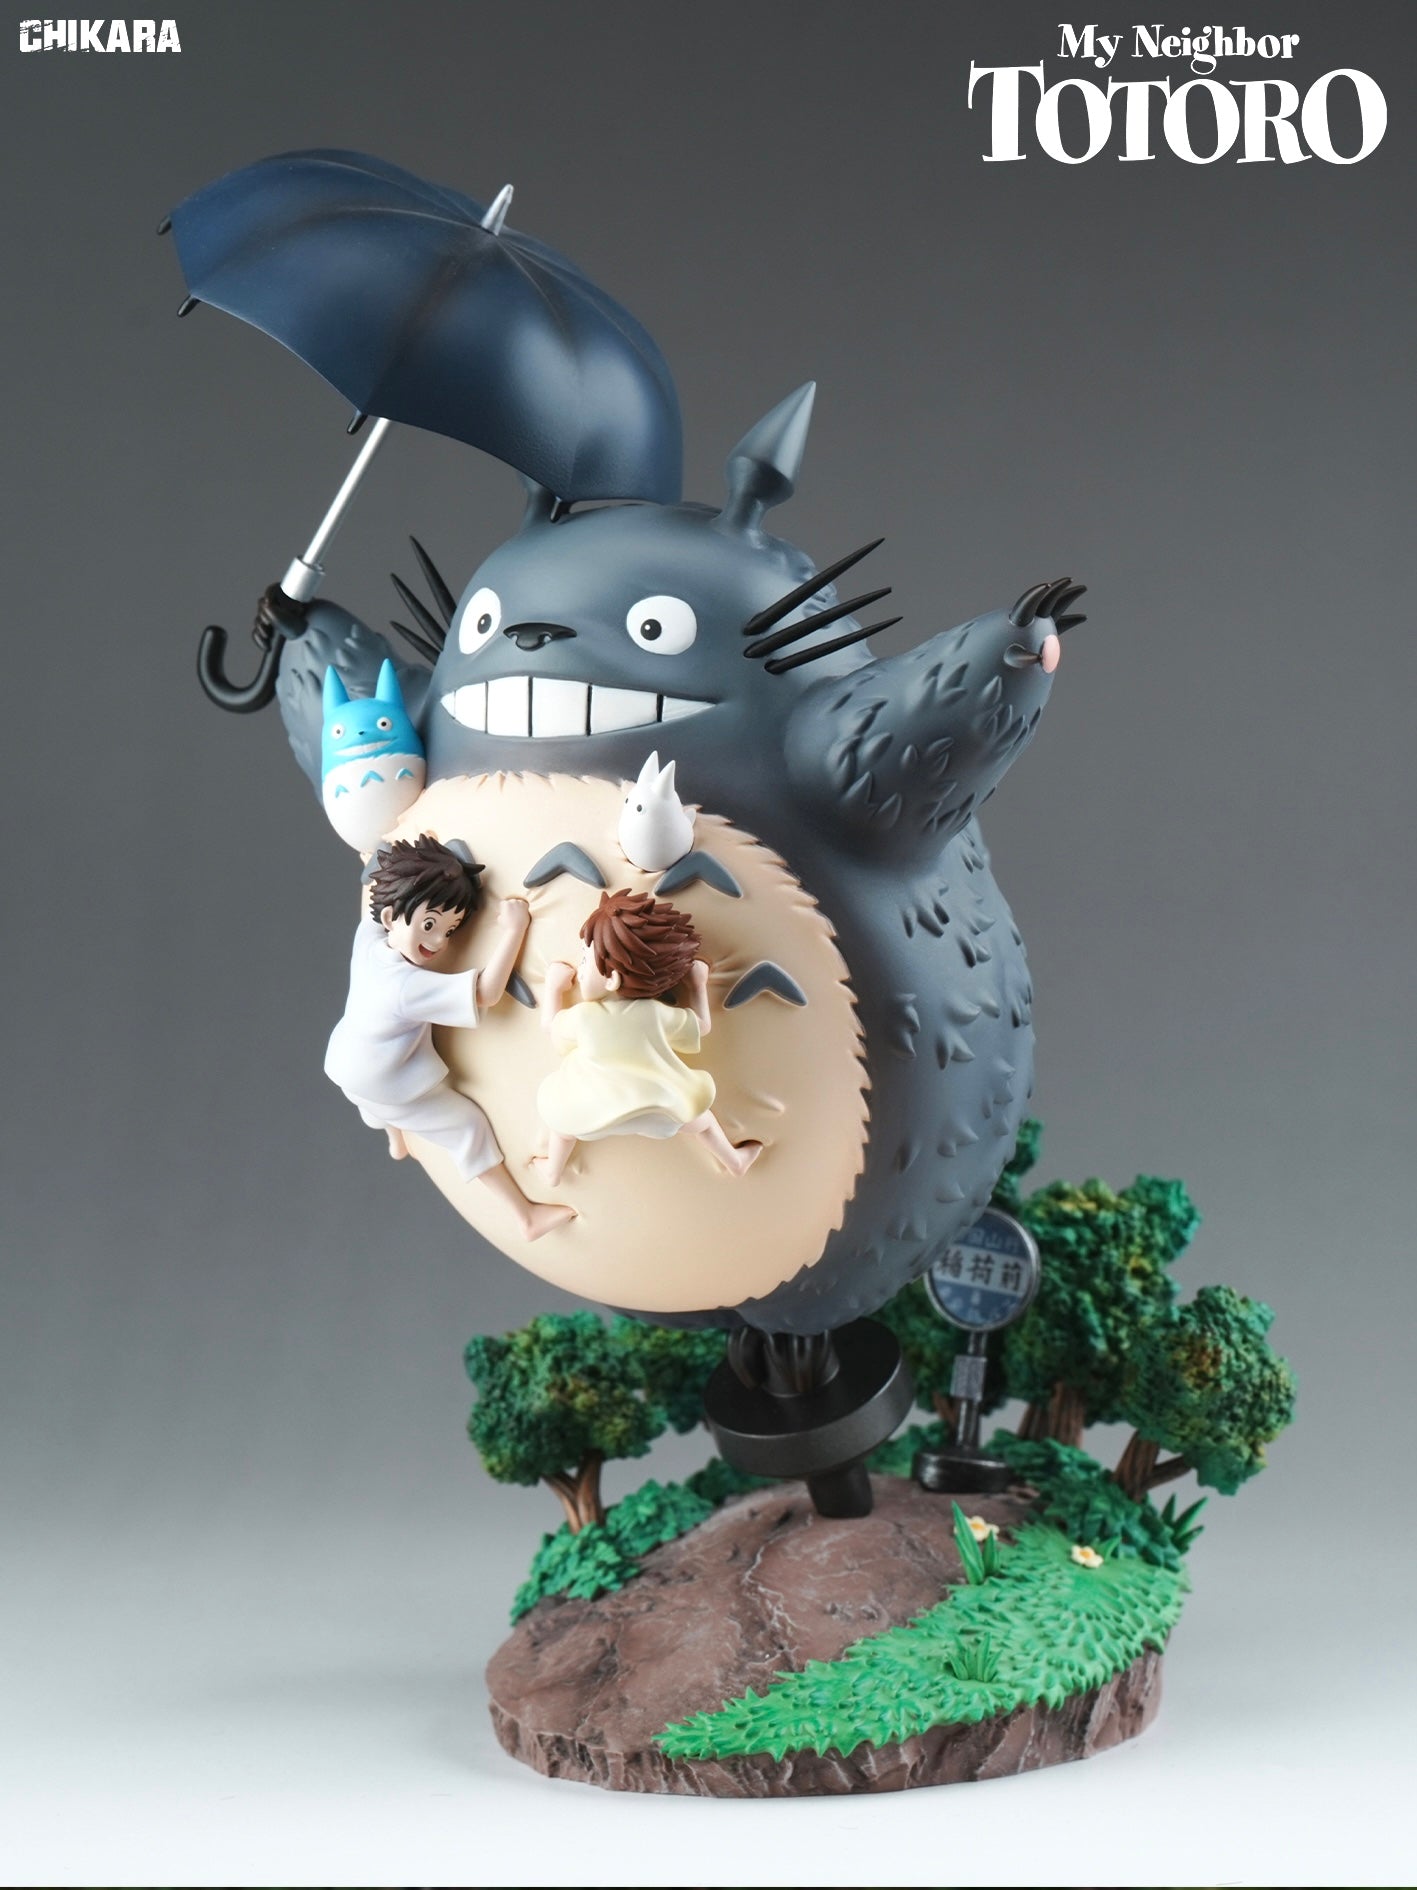 My Neighbor Totoro Studio Ghibli Desk Series Totoro Resin Statue - CHIKARA Studio [Pre-Order]